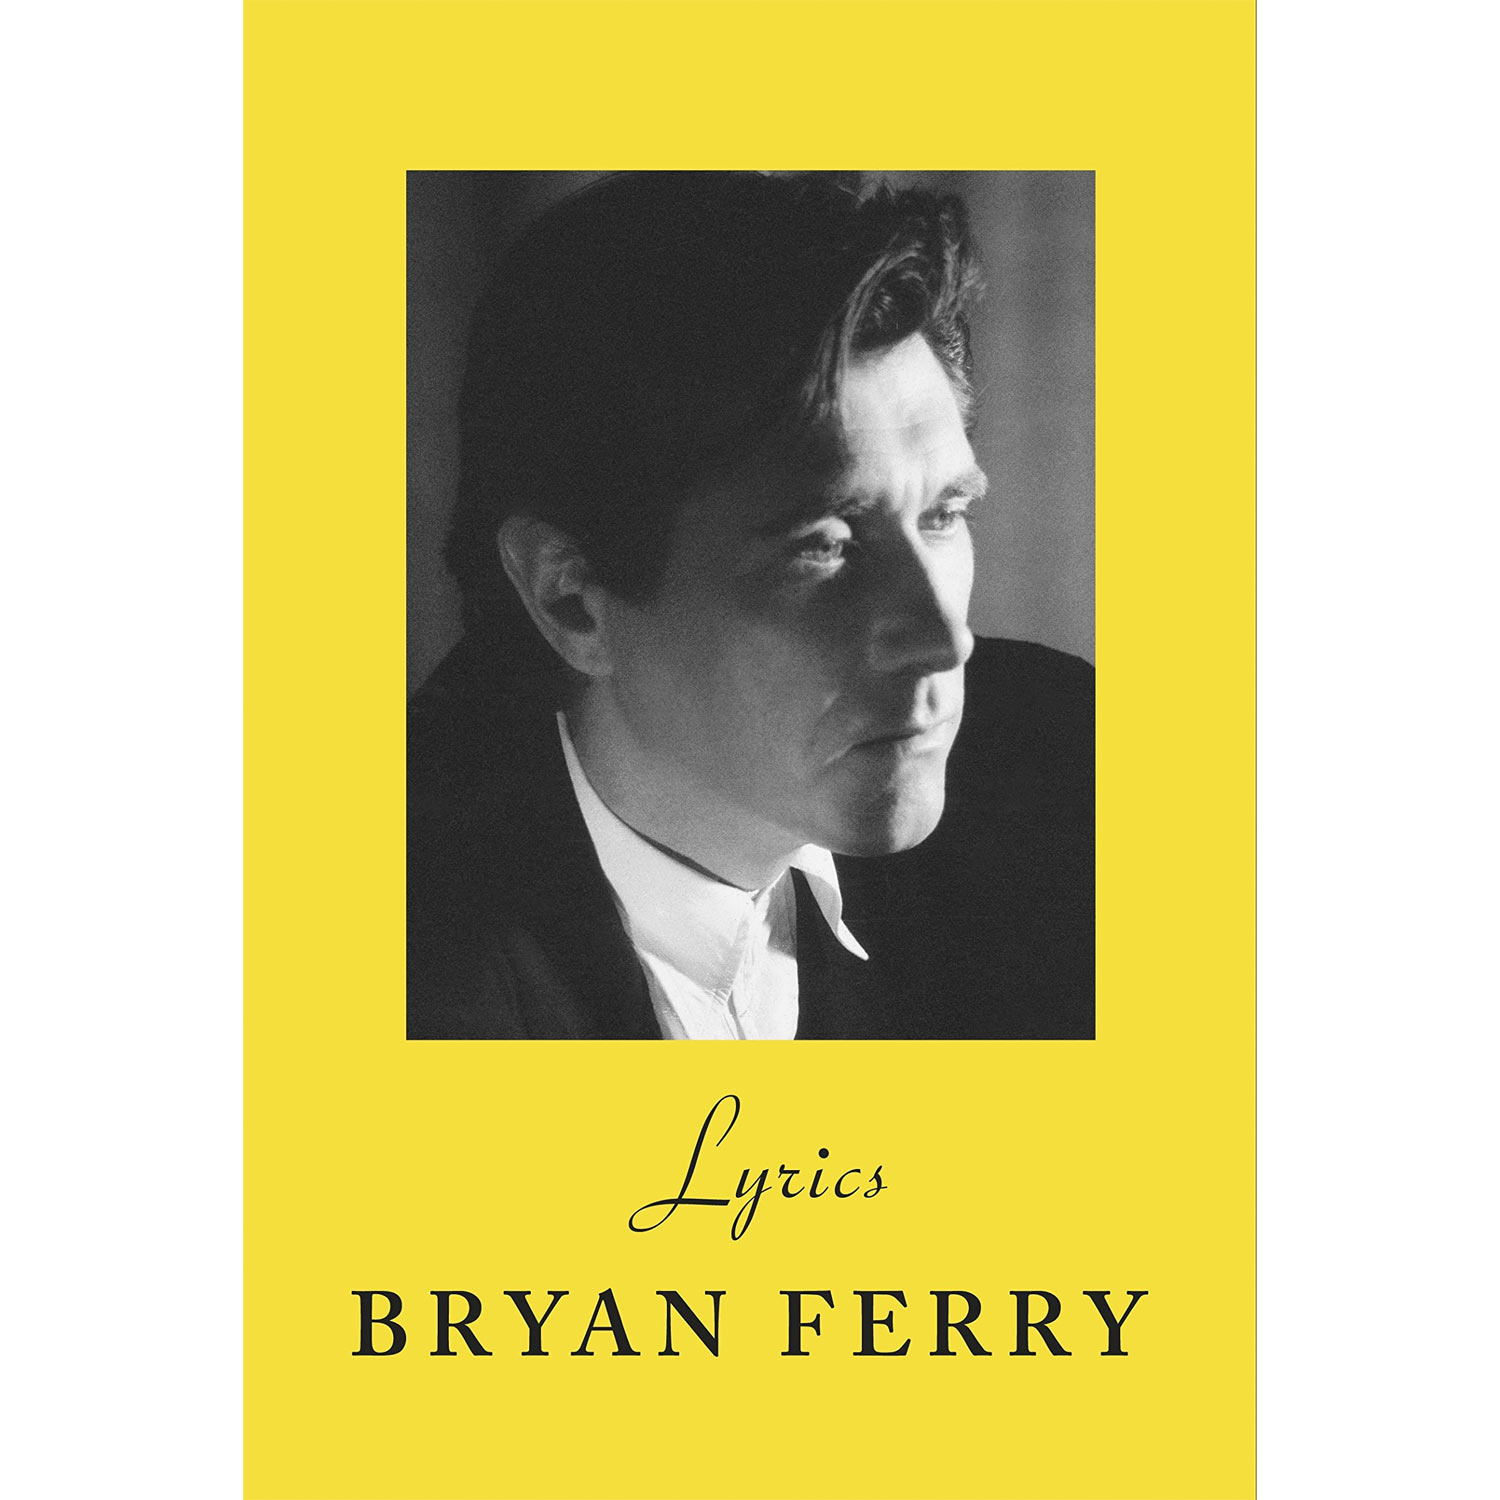 Bryan Ferry / Lyrics signed book